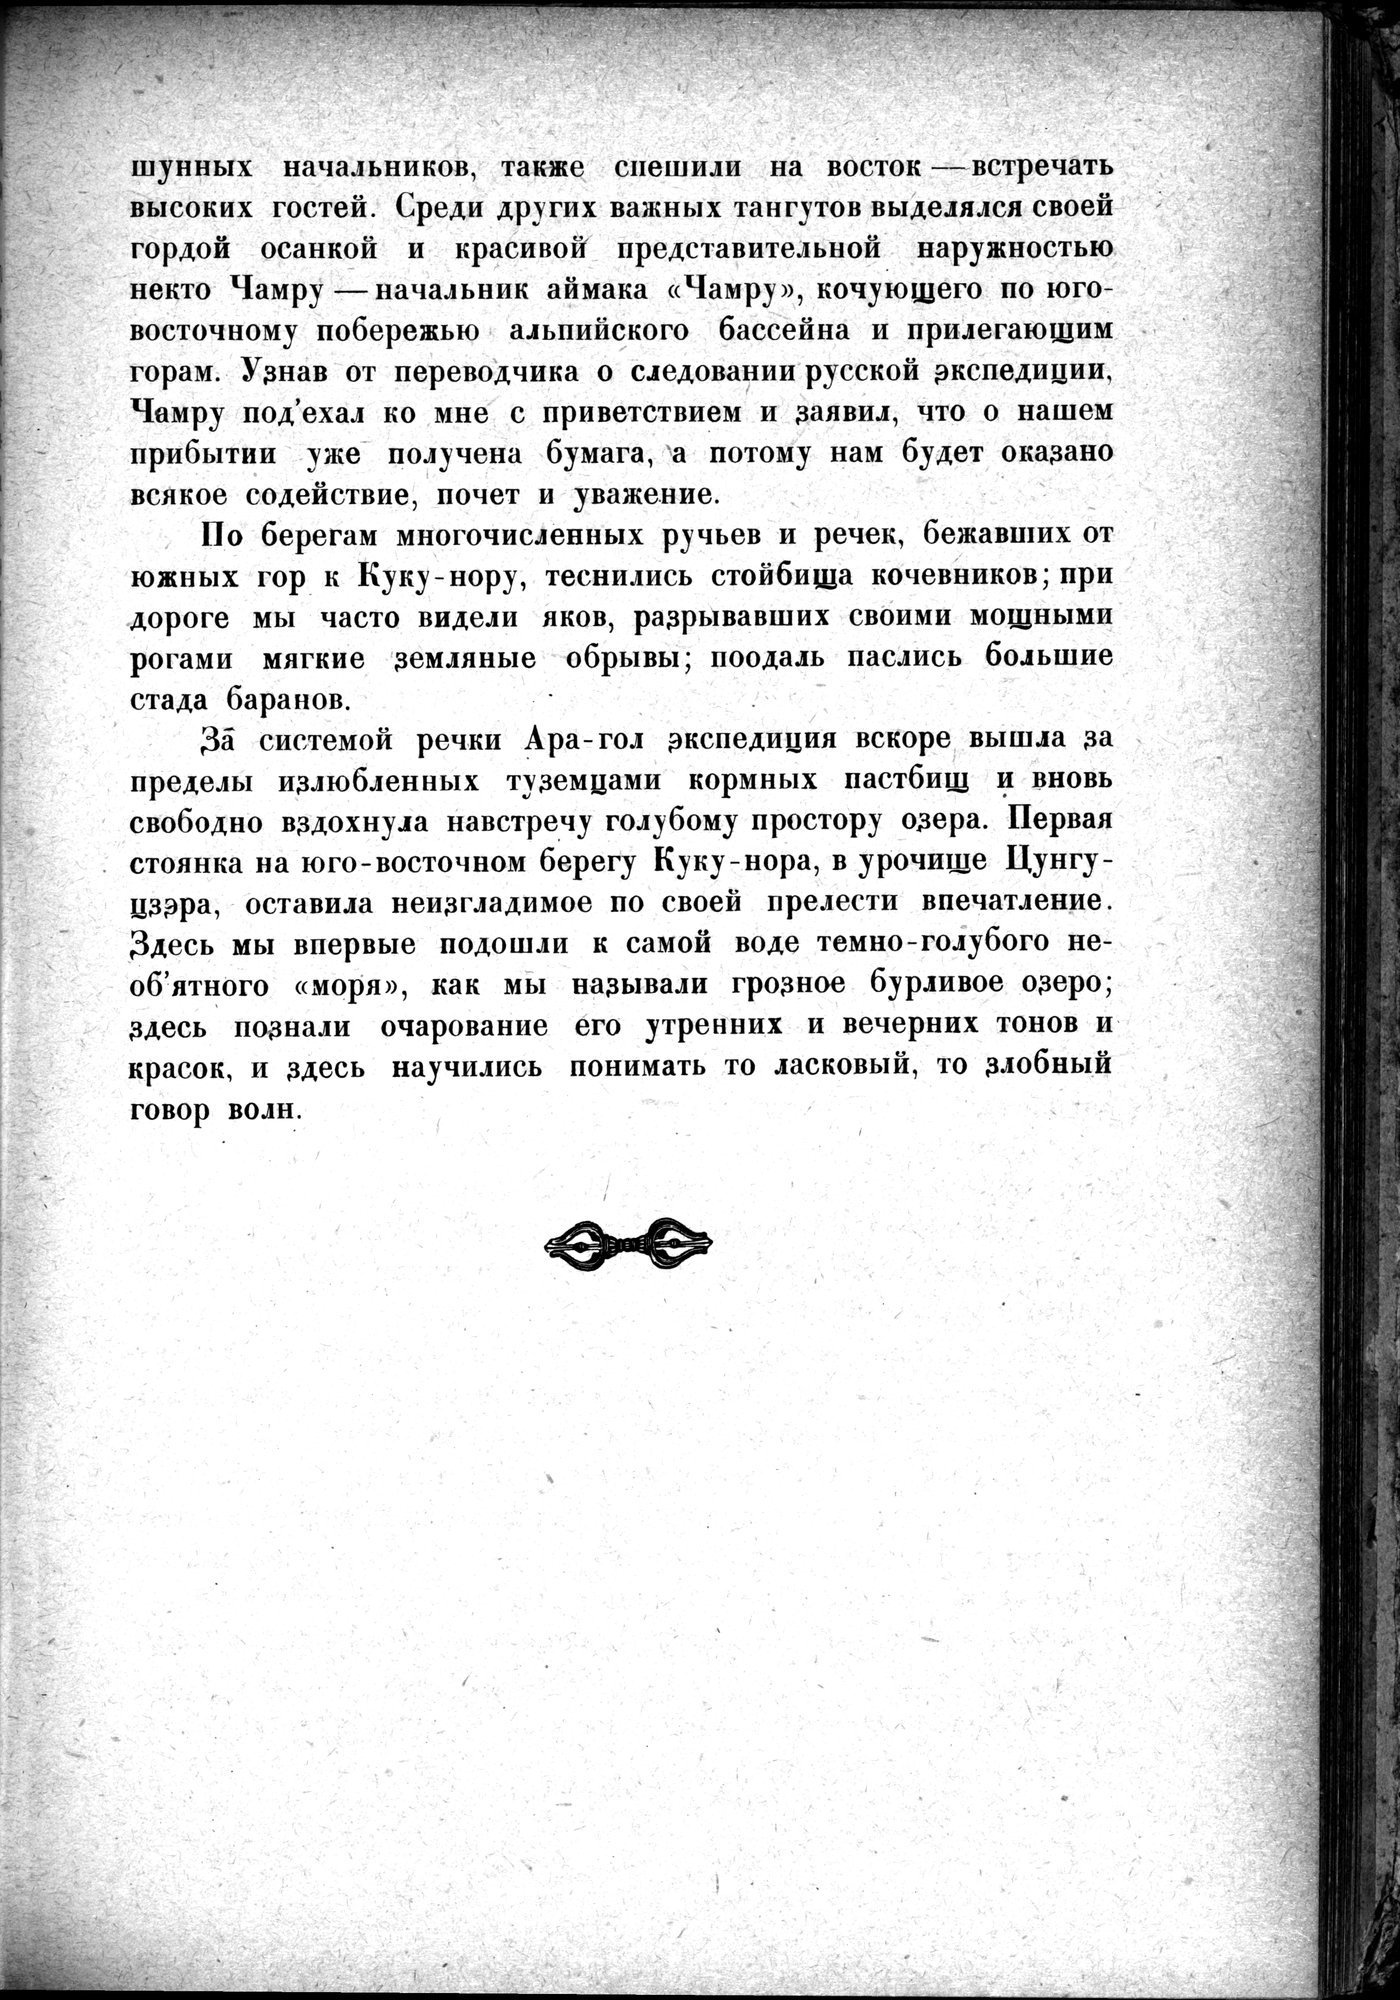 Mongoliya i Amdo i mertby gorod Khara-Khoto : vol.1 / Page 359 (Grayscale High Resolution Image)